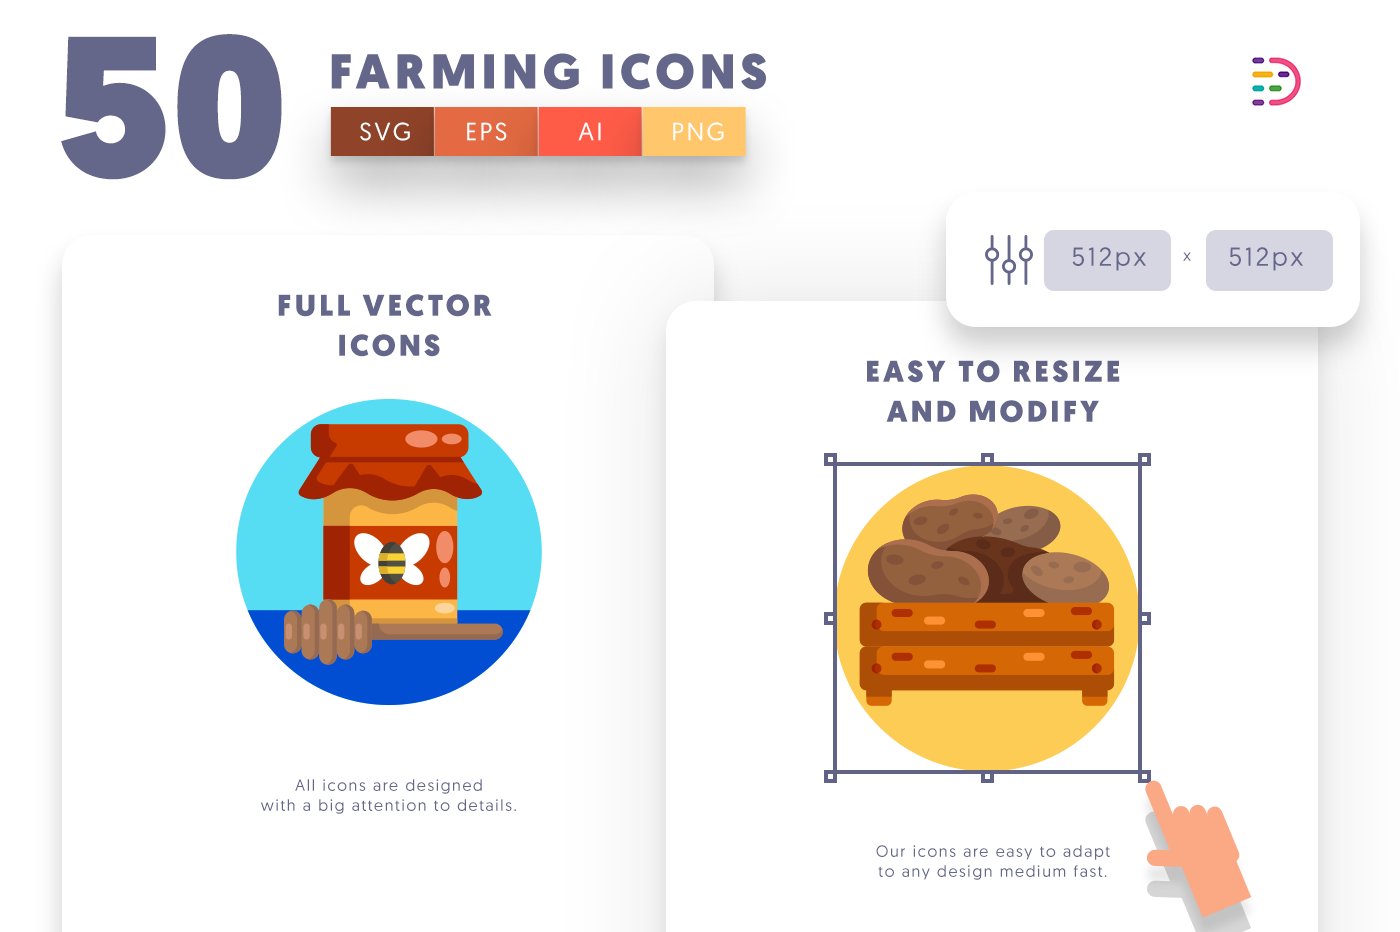 farming icons cover 6 513